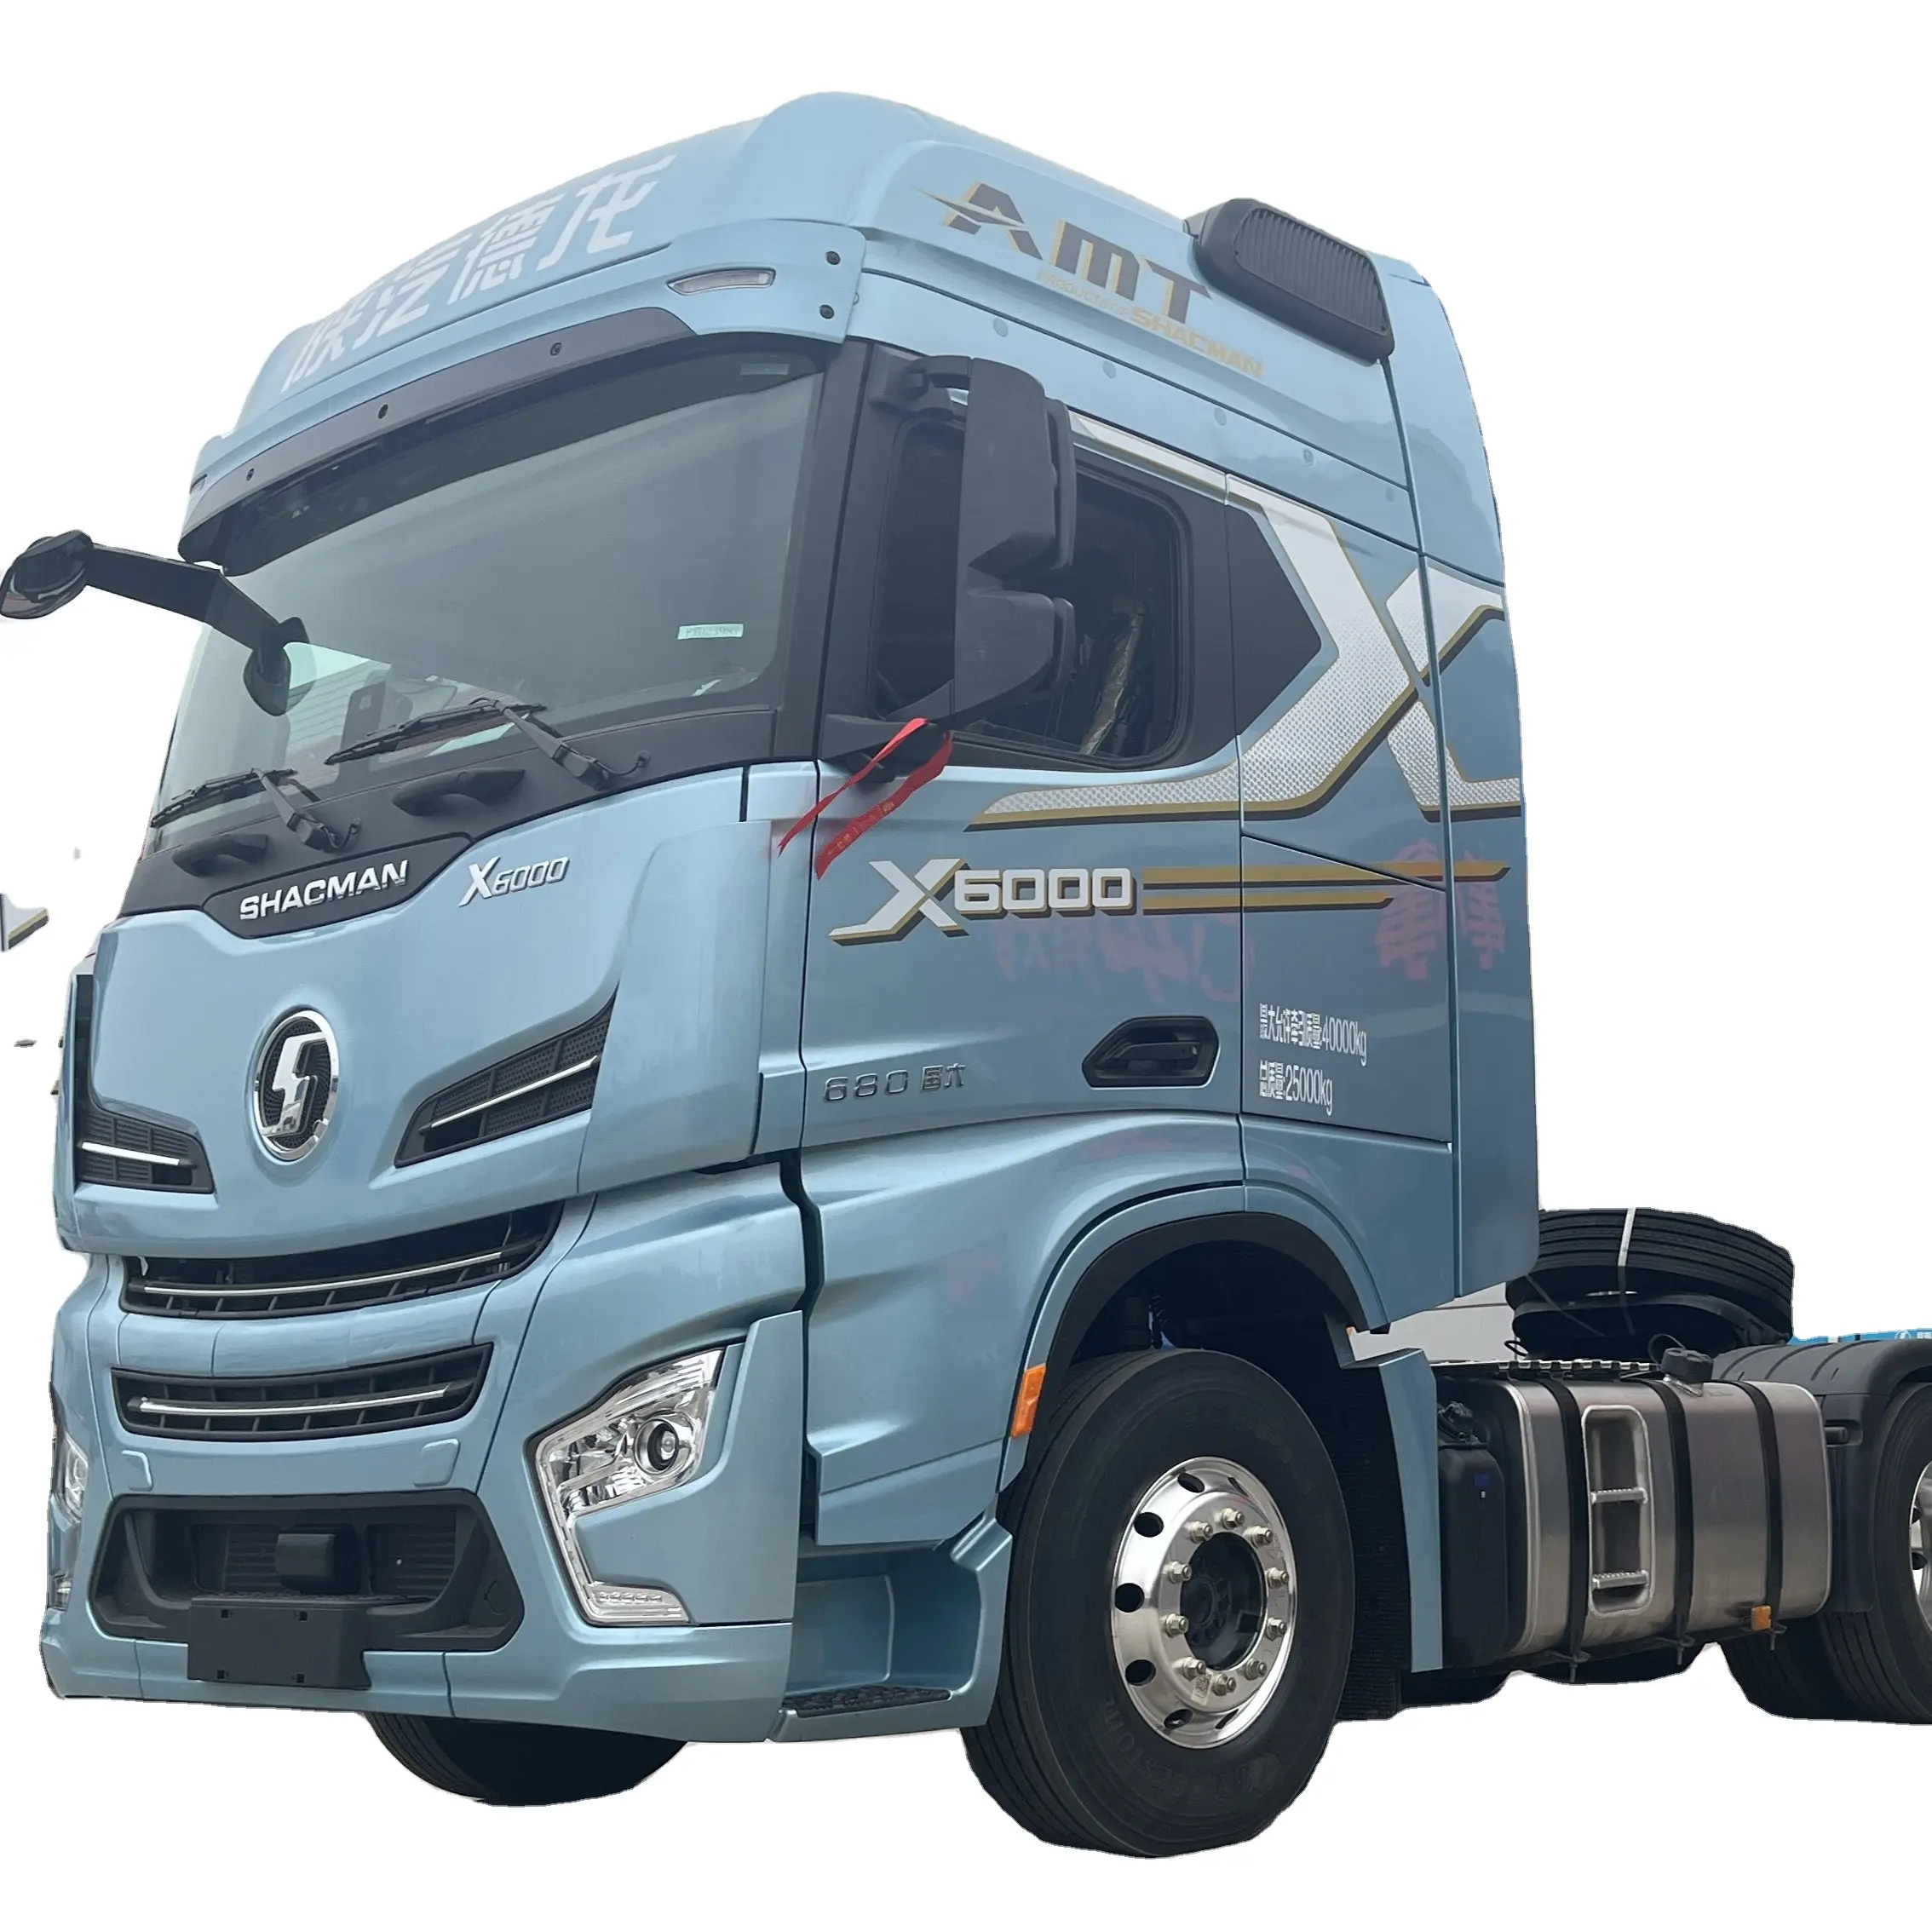 Nuovissimo trattore camion Orichinal tedesco nuovissimo Shacman sino europa 6x4 modello shacman trattore camion